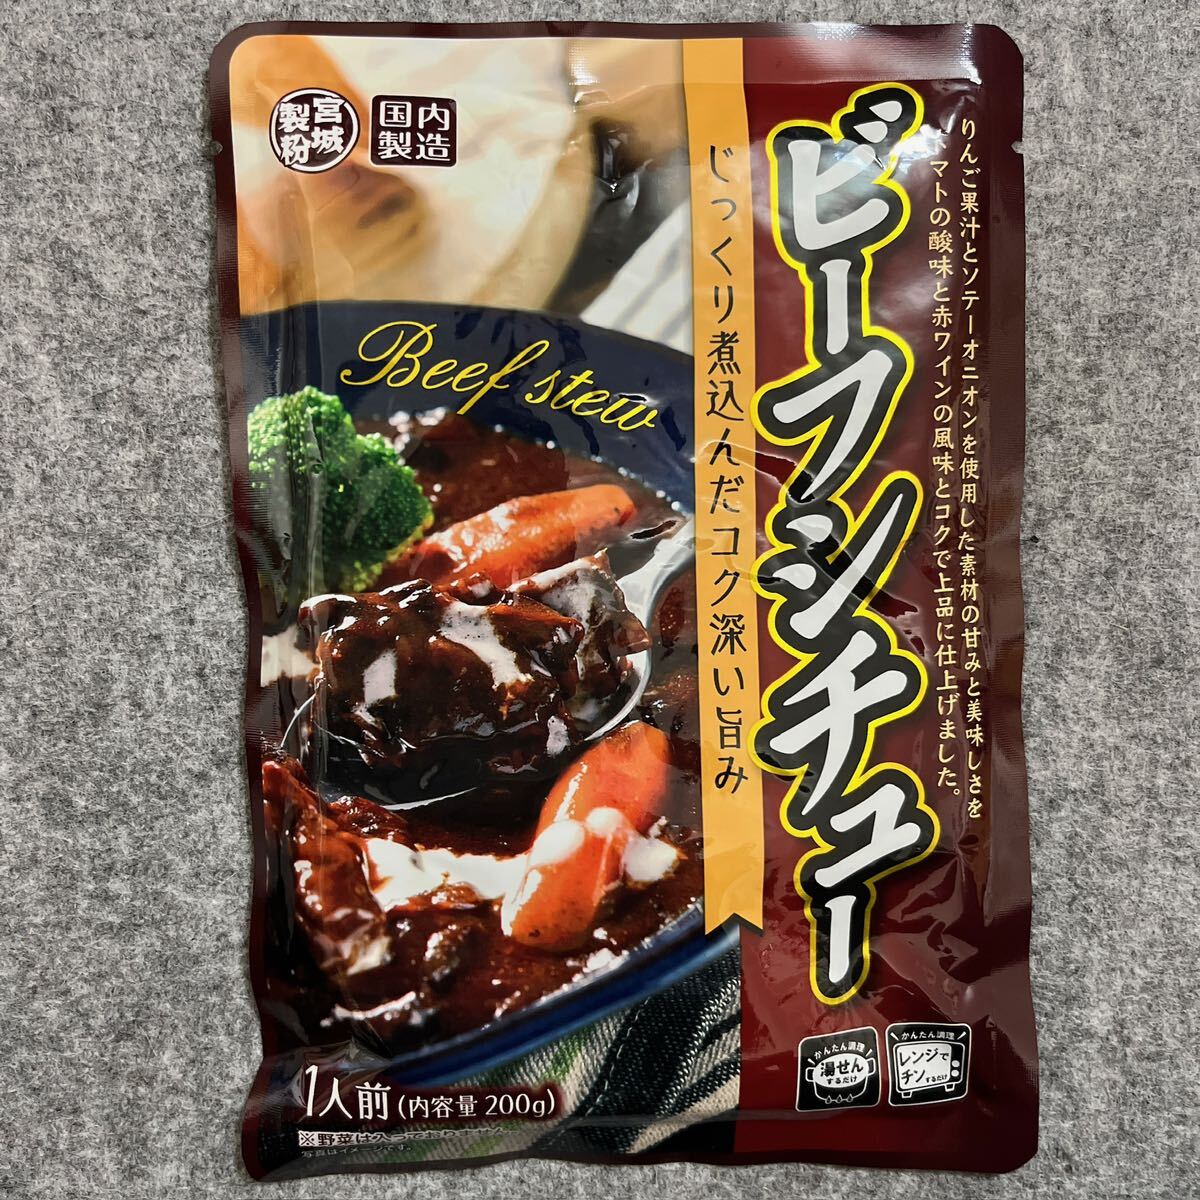  beef stew 200g×5 sack set retortable pouch set sale Miyagi made flour 